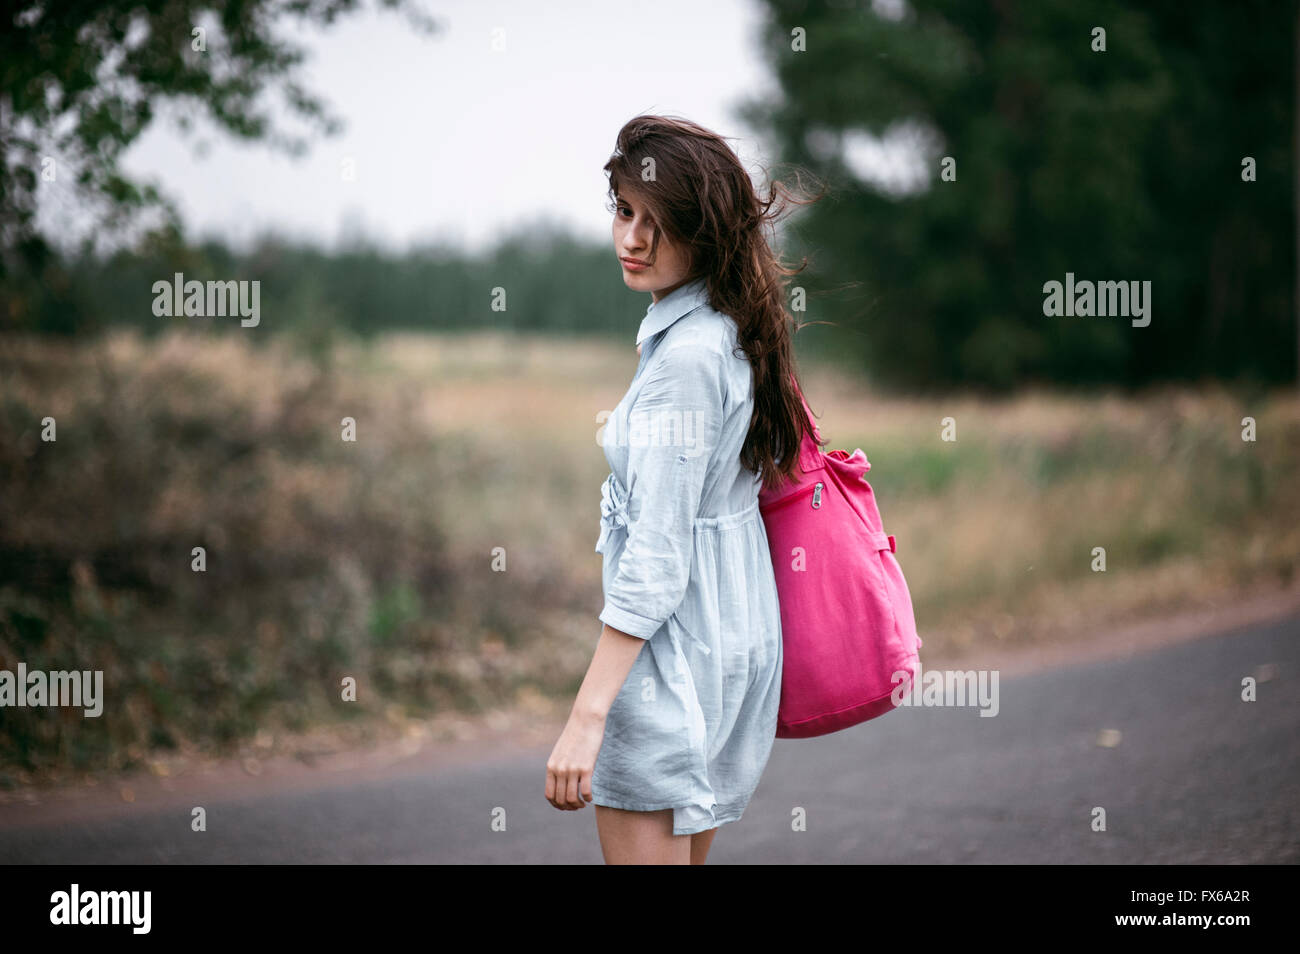 Caucasian woman walking on rural road Stock Photo